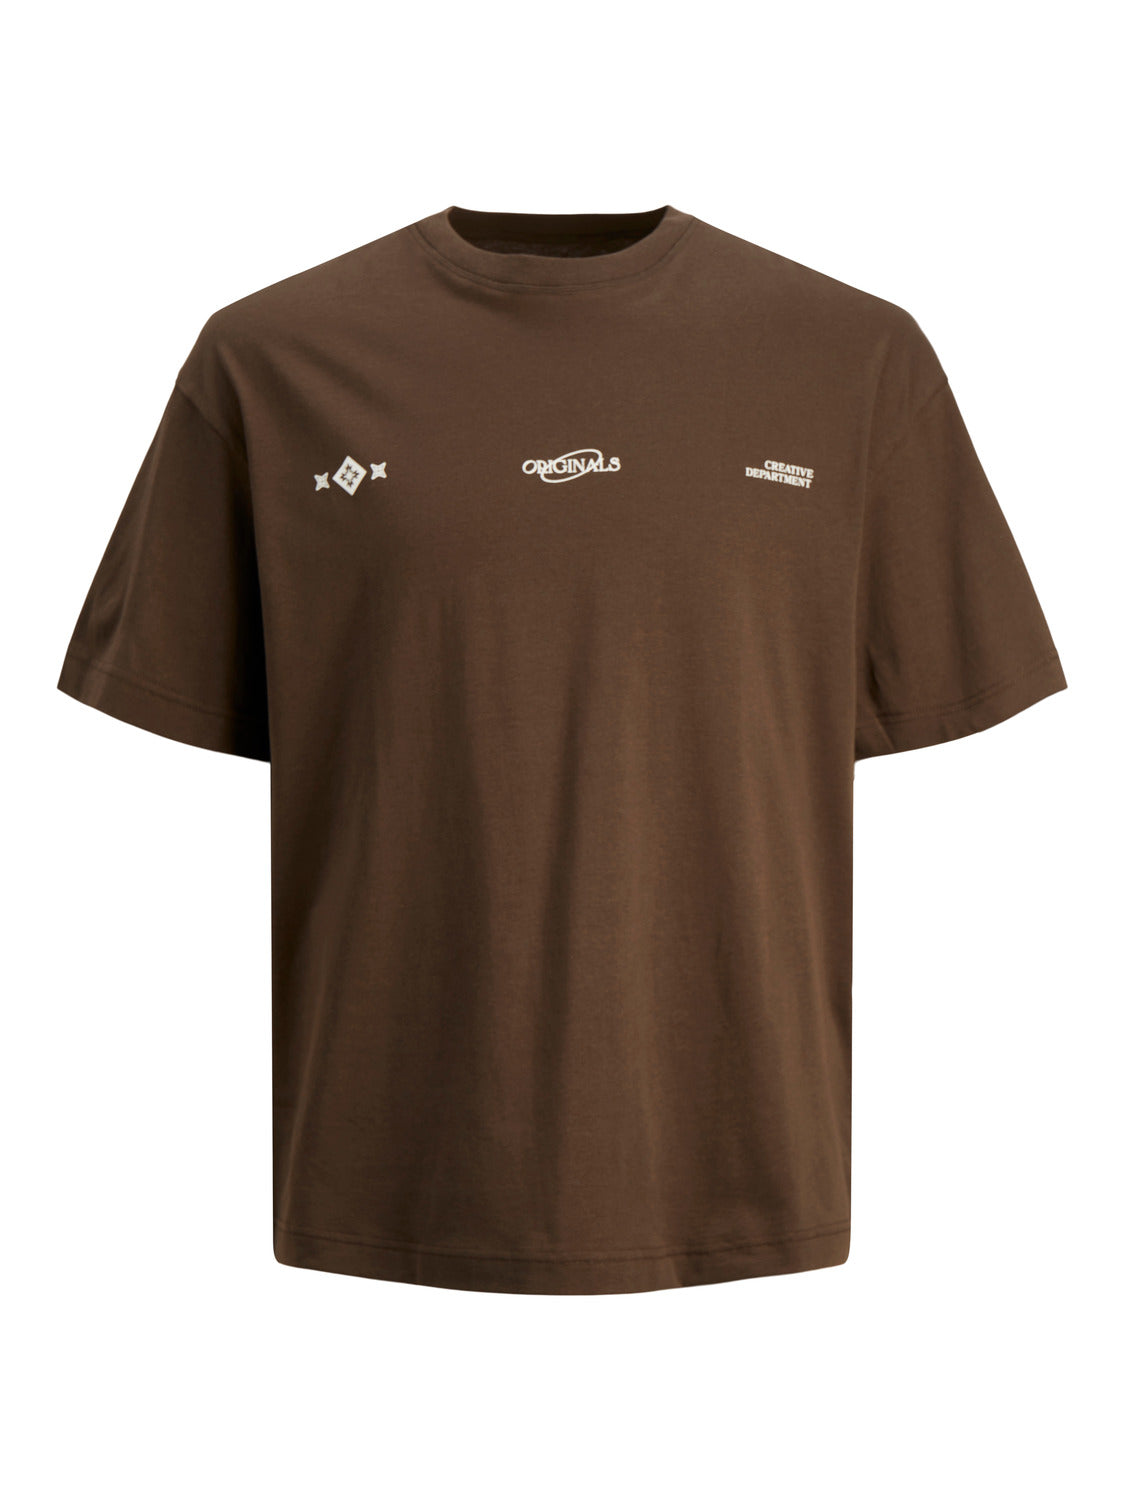 Camiseta de manga corta- JORGRACIA Marrón Chocolate